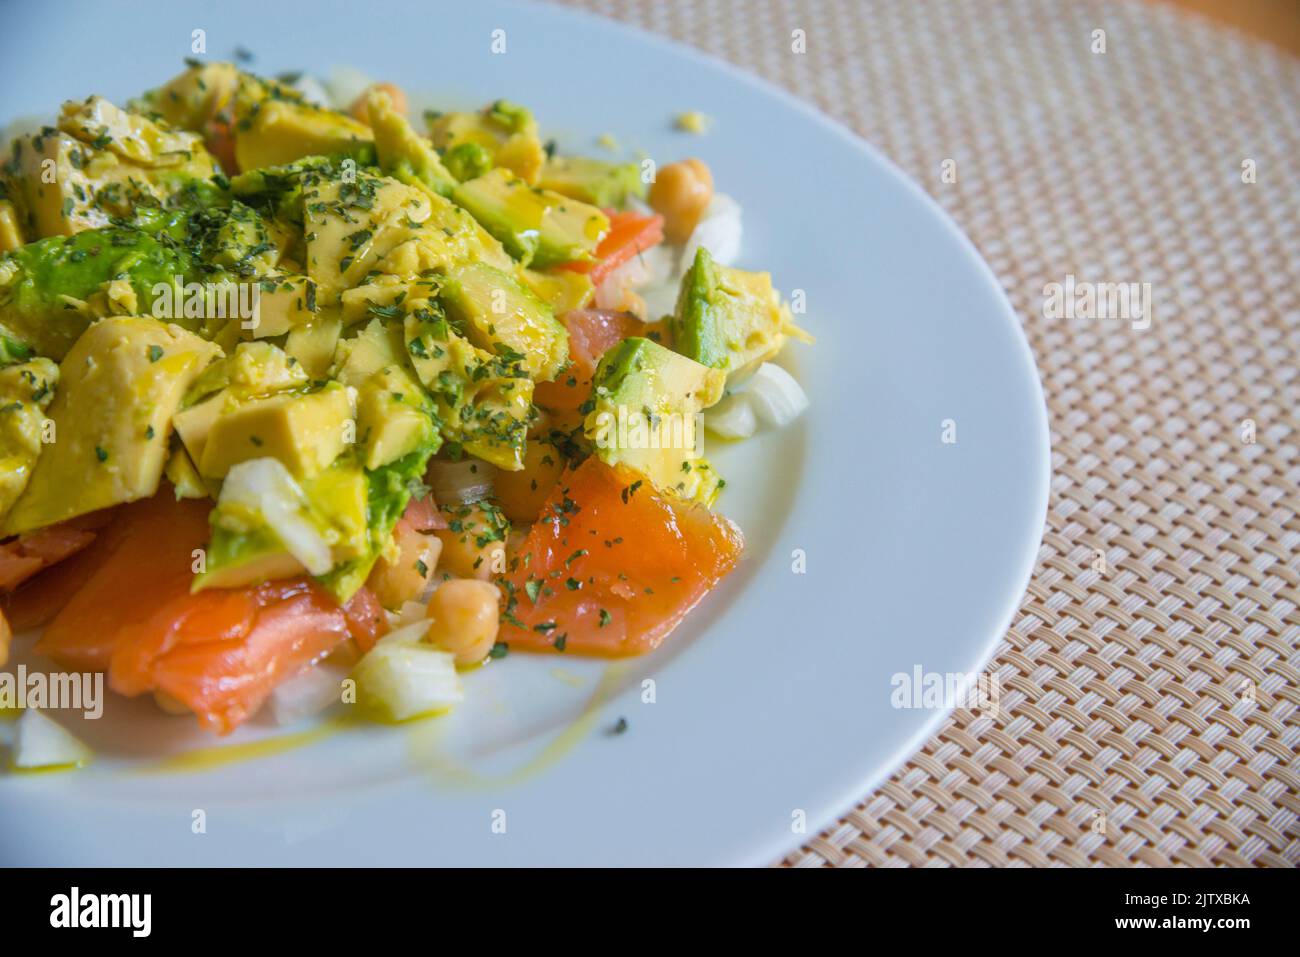 Salad made of avocado, tomato, chickpeas, onion, coriander and olive oil. Stock Photo